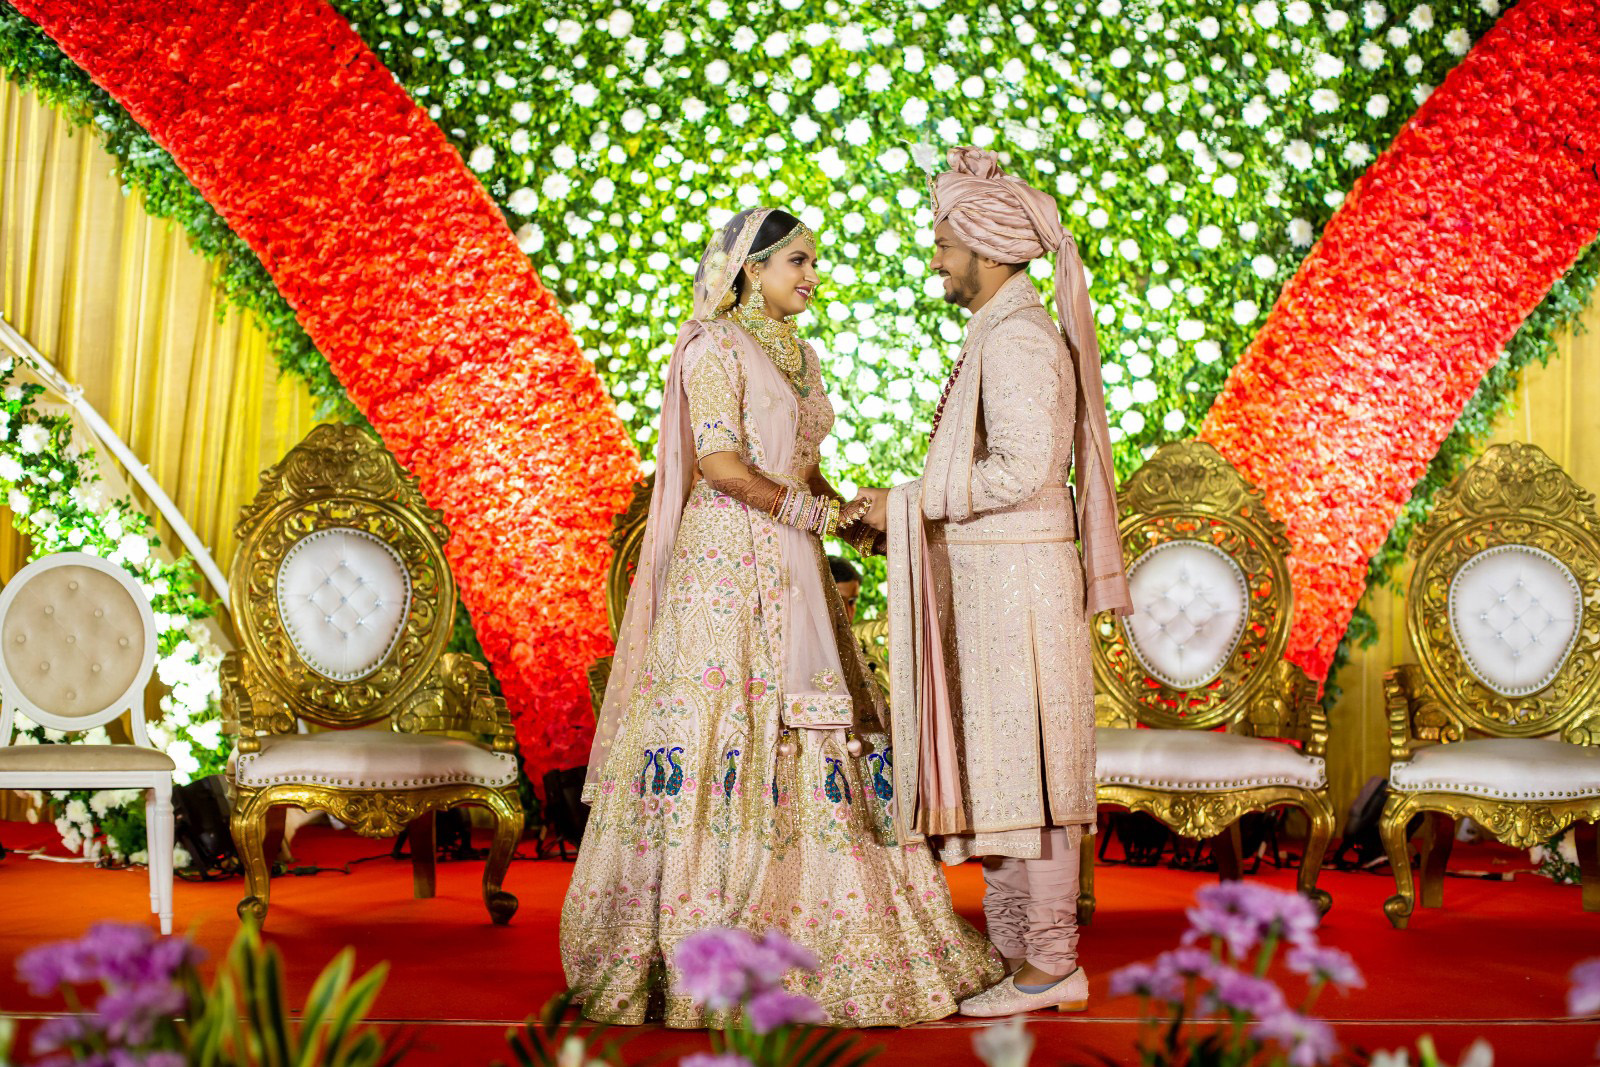 Nikhil and Juhi's wedding